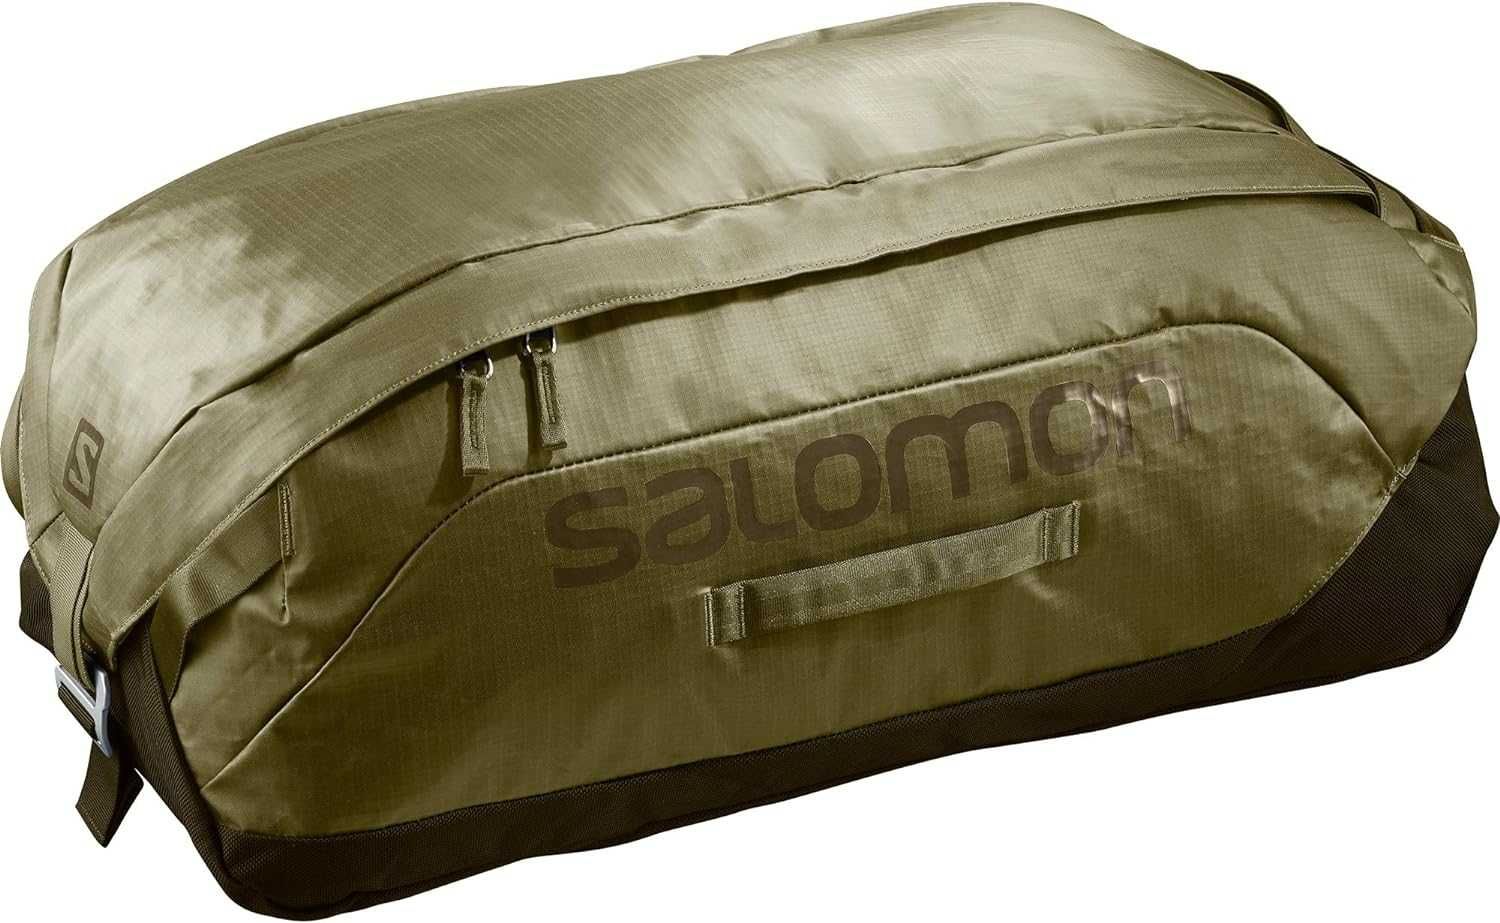 Salomon Unisex Duffel 45 torba podróżna, NS, olive night,Turystyka.